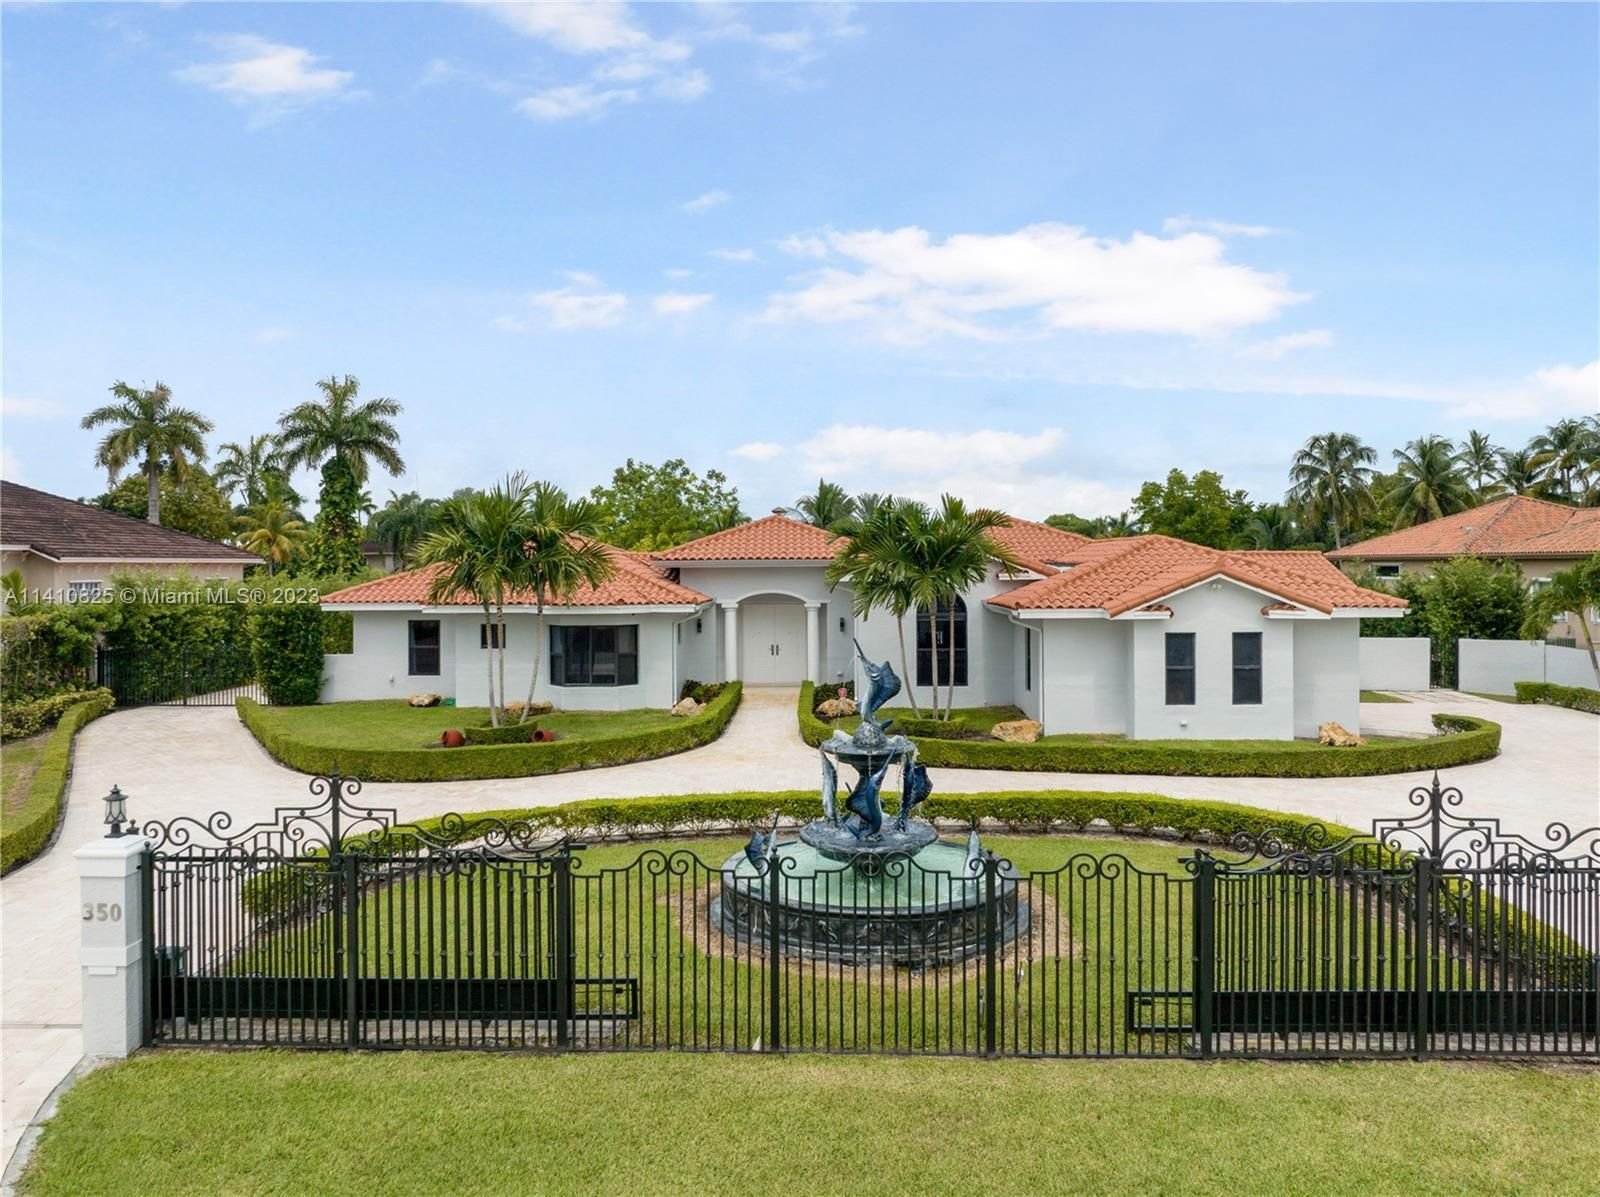 Real estate property located at 350 124th Ave, Miami-Dade County, Miami, FL